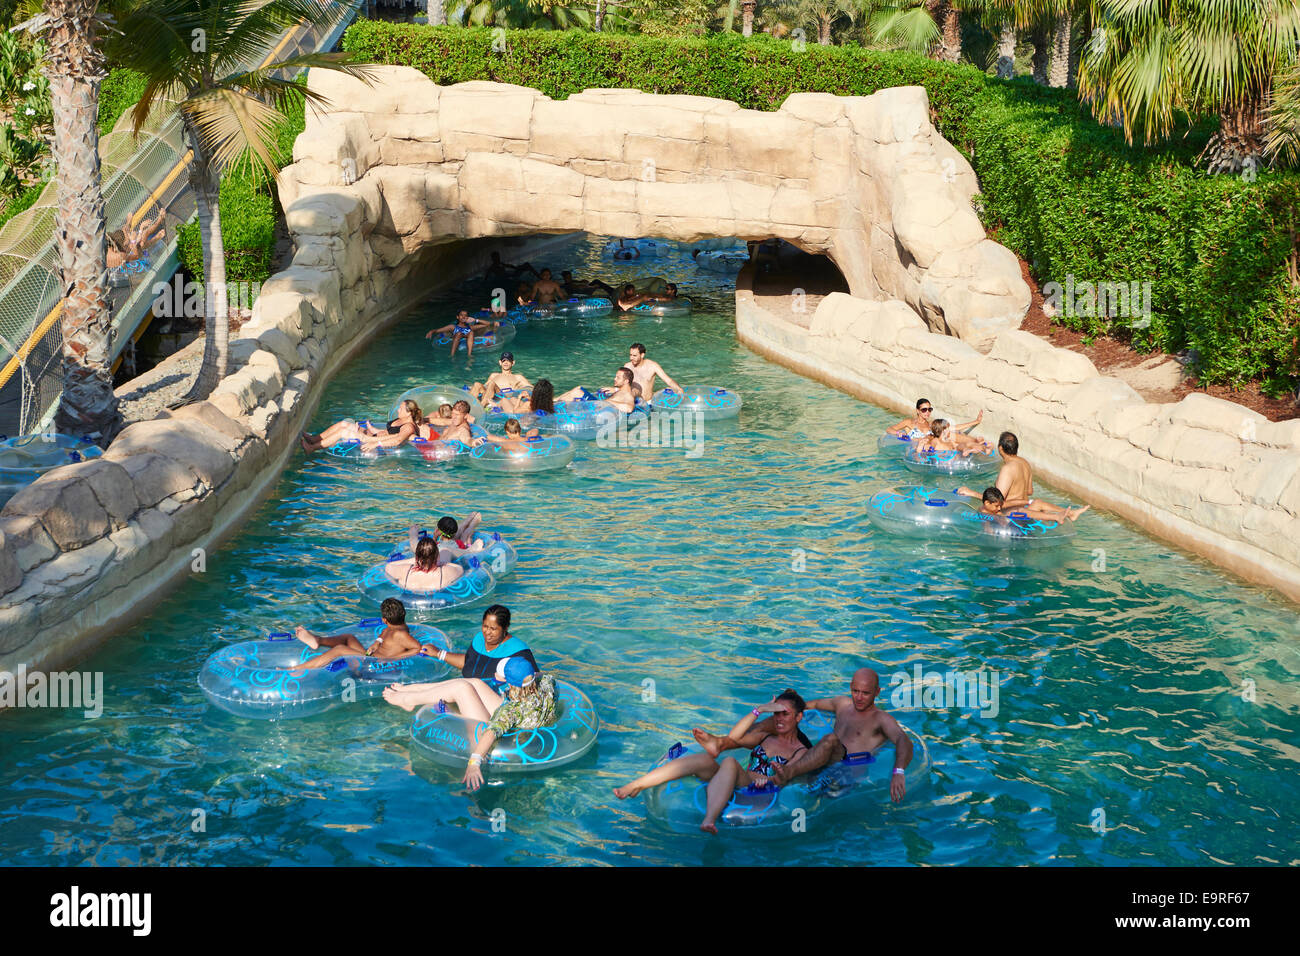 The River Ride At The Aquaventure Waterpark The Atlantis Hotel The Palm Dubai UAE Stock Photo